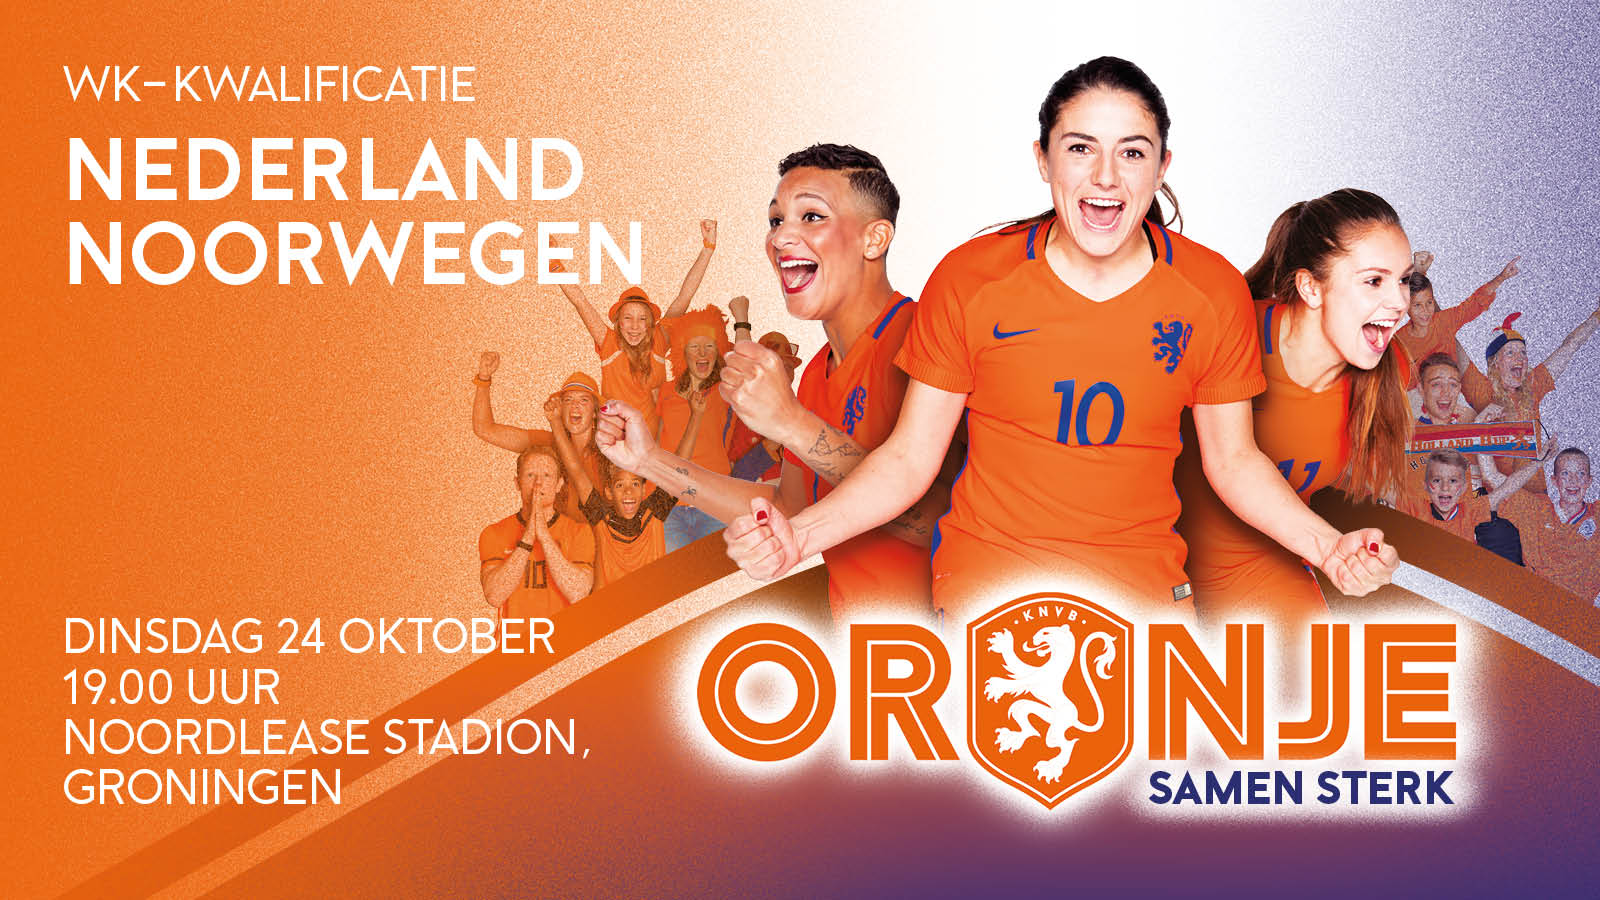 Nederland-Noorwegen (dinsdag 24 oktober 2017, Noordlease Stadion, aanvang 19.00 uur)